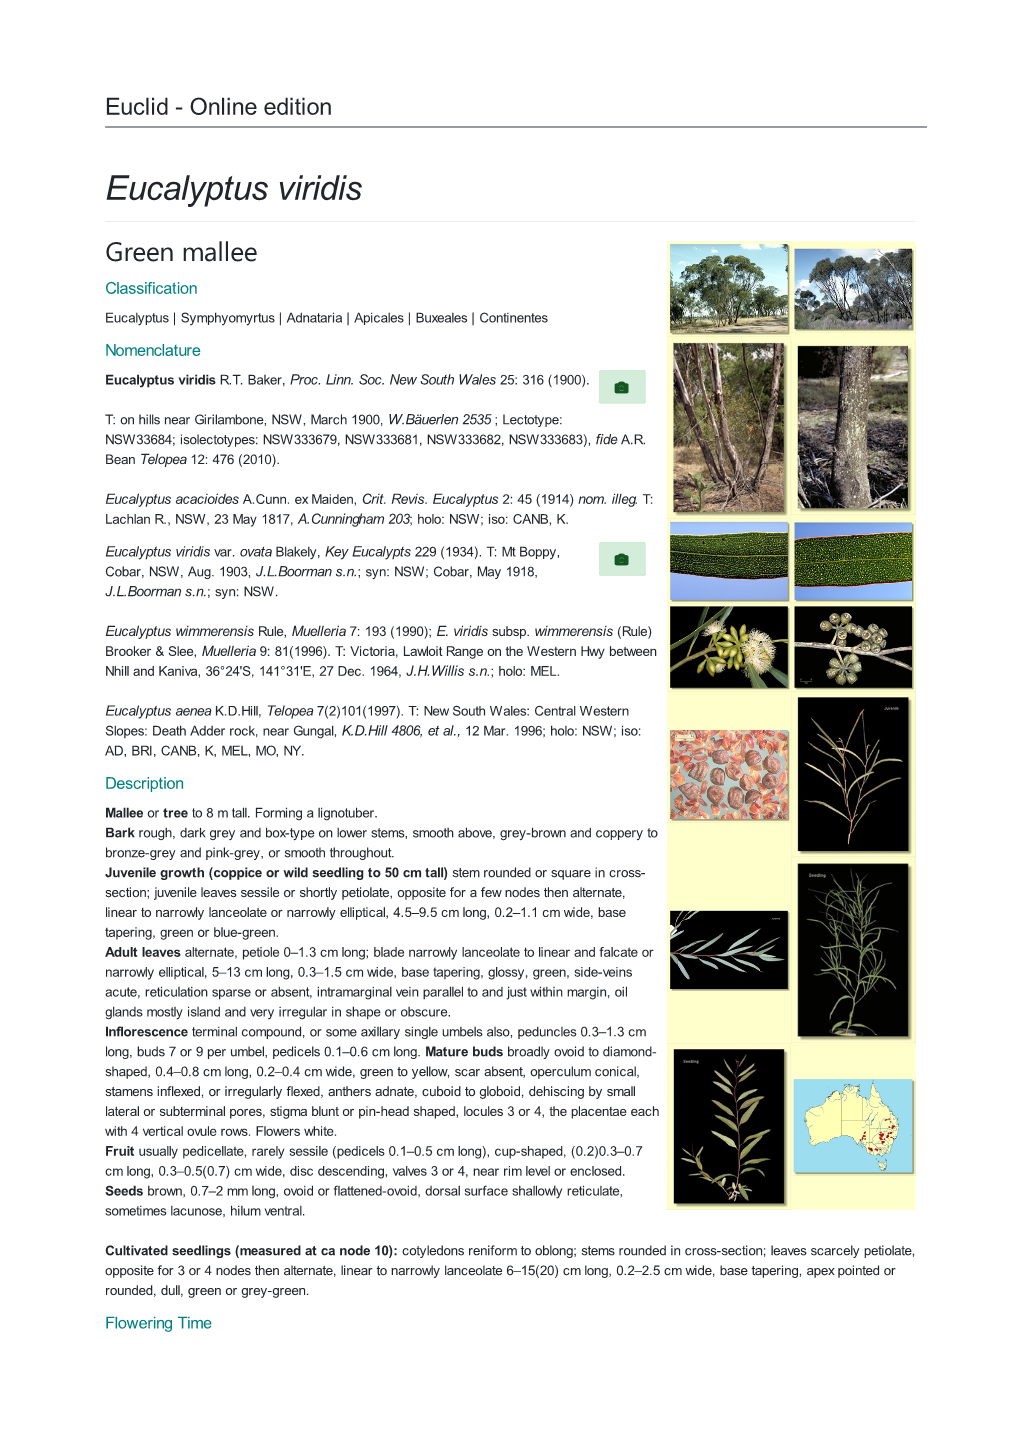 Eucalyptus Viridis Green Mallee Classification Eucalyptus | Symphyomyrtus | Adnataria | Apicales | Buxeales | Continentes Nomenclature